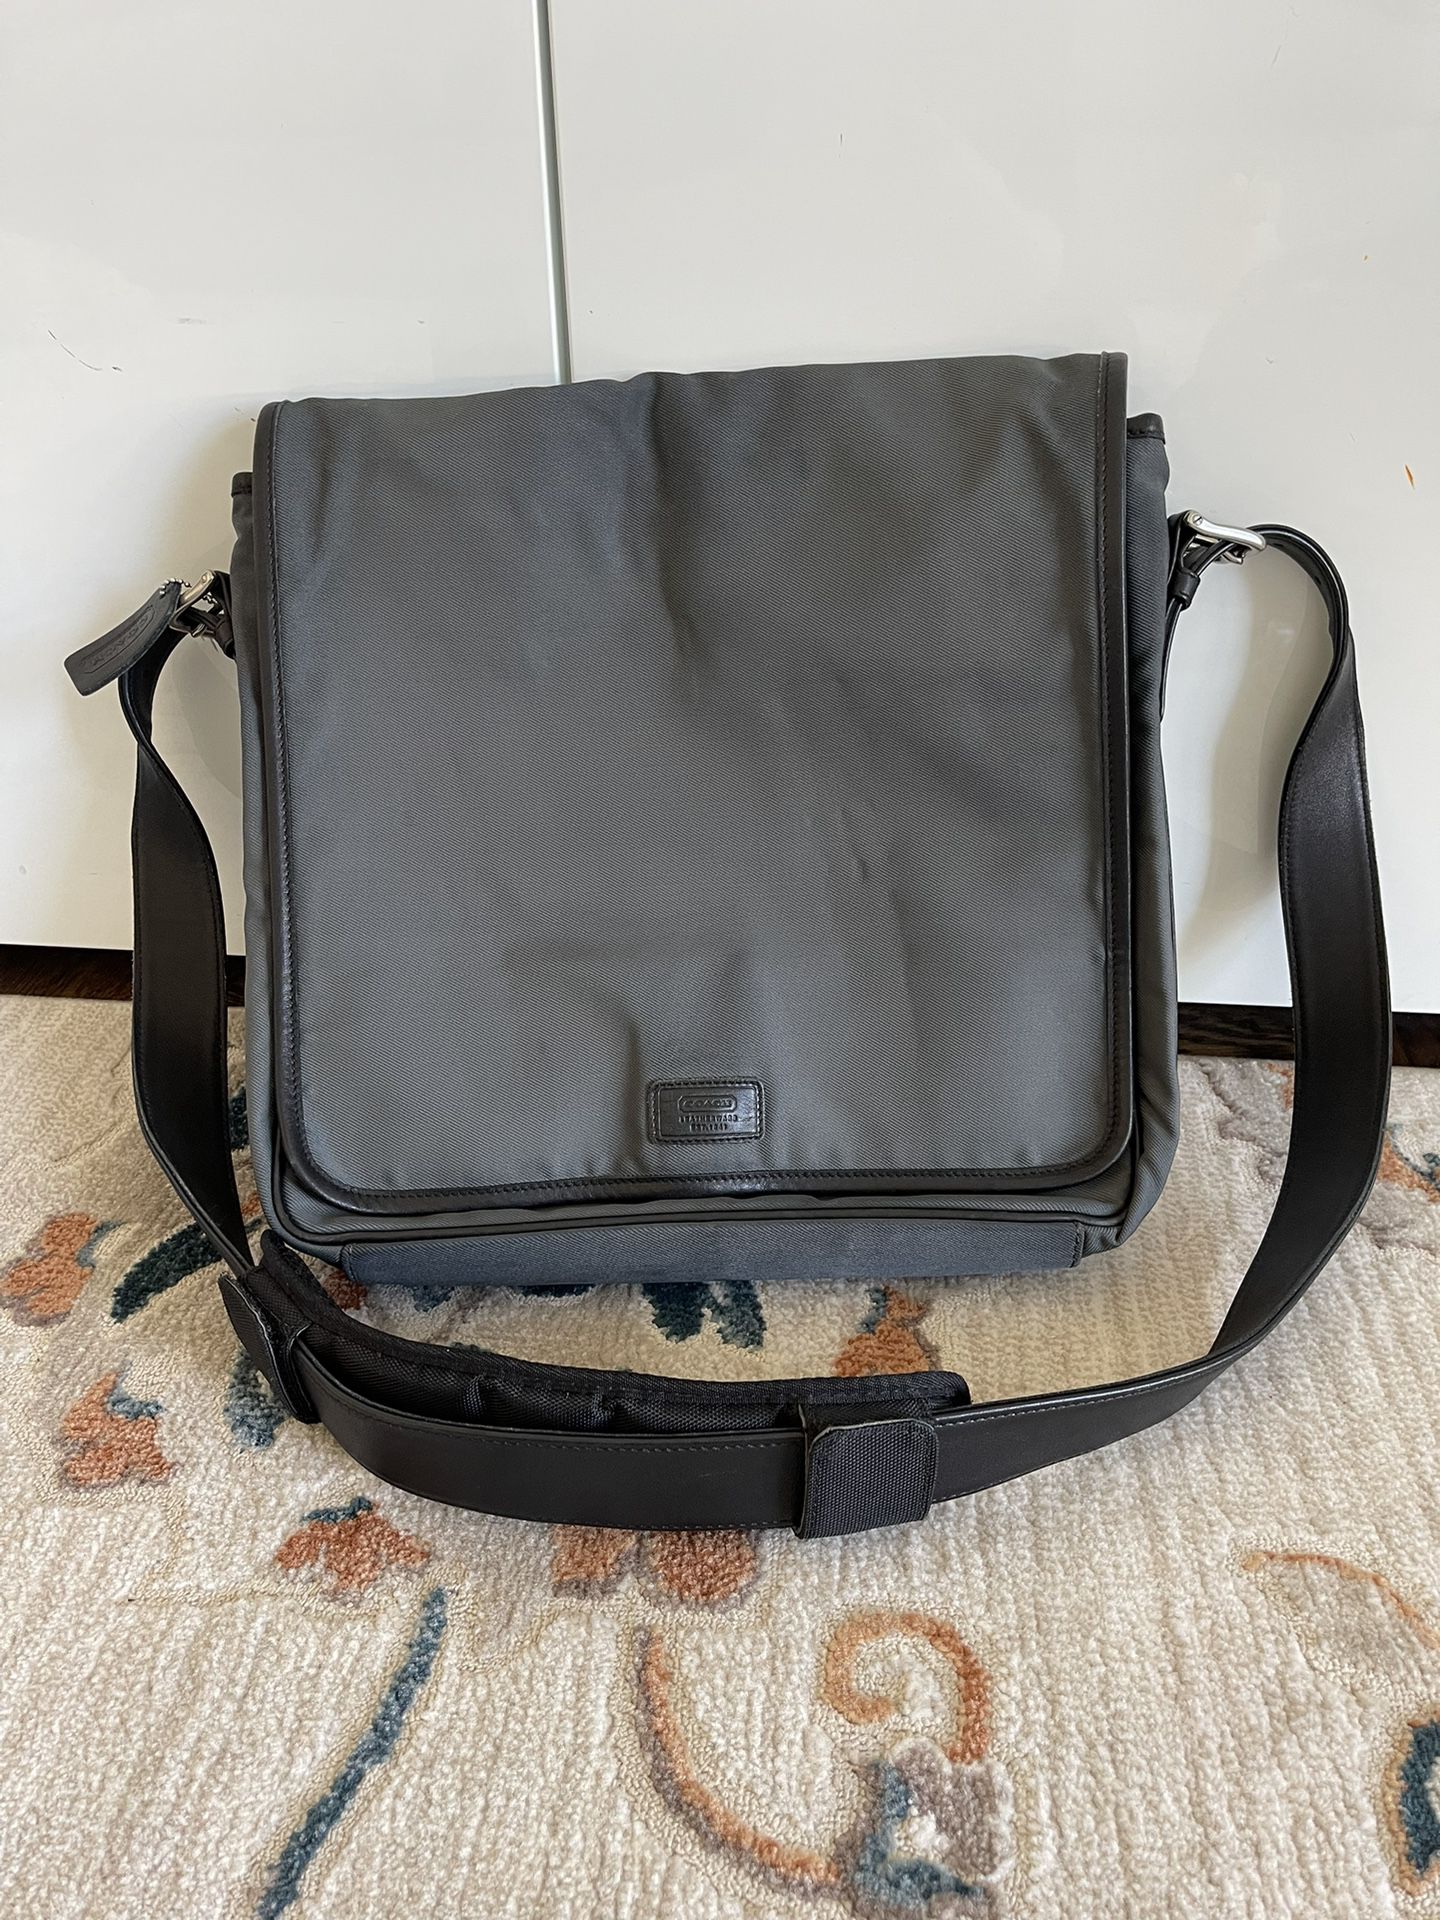 Coach Messenger Bag AIL - 5109 leather trim blue gray